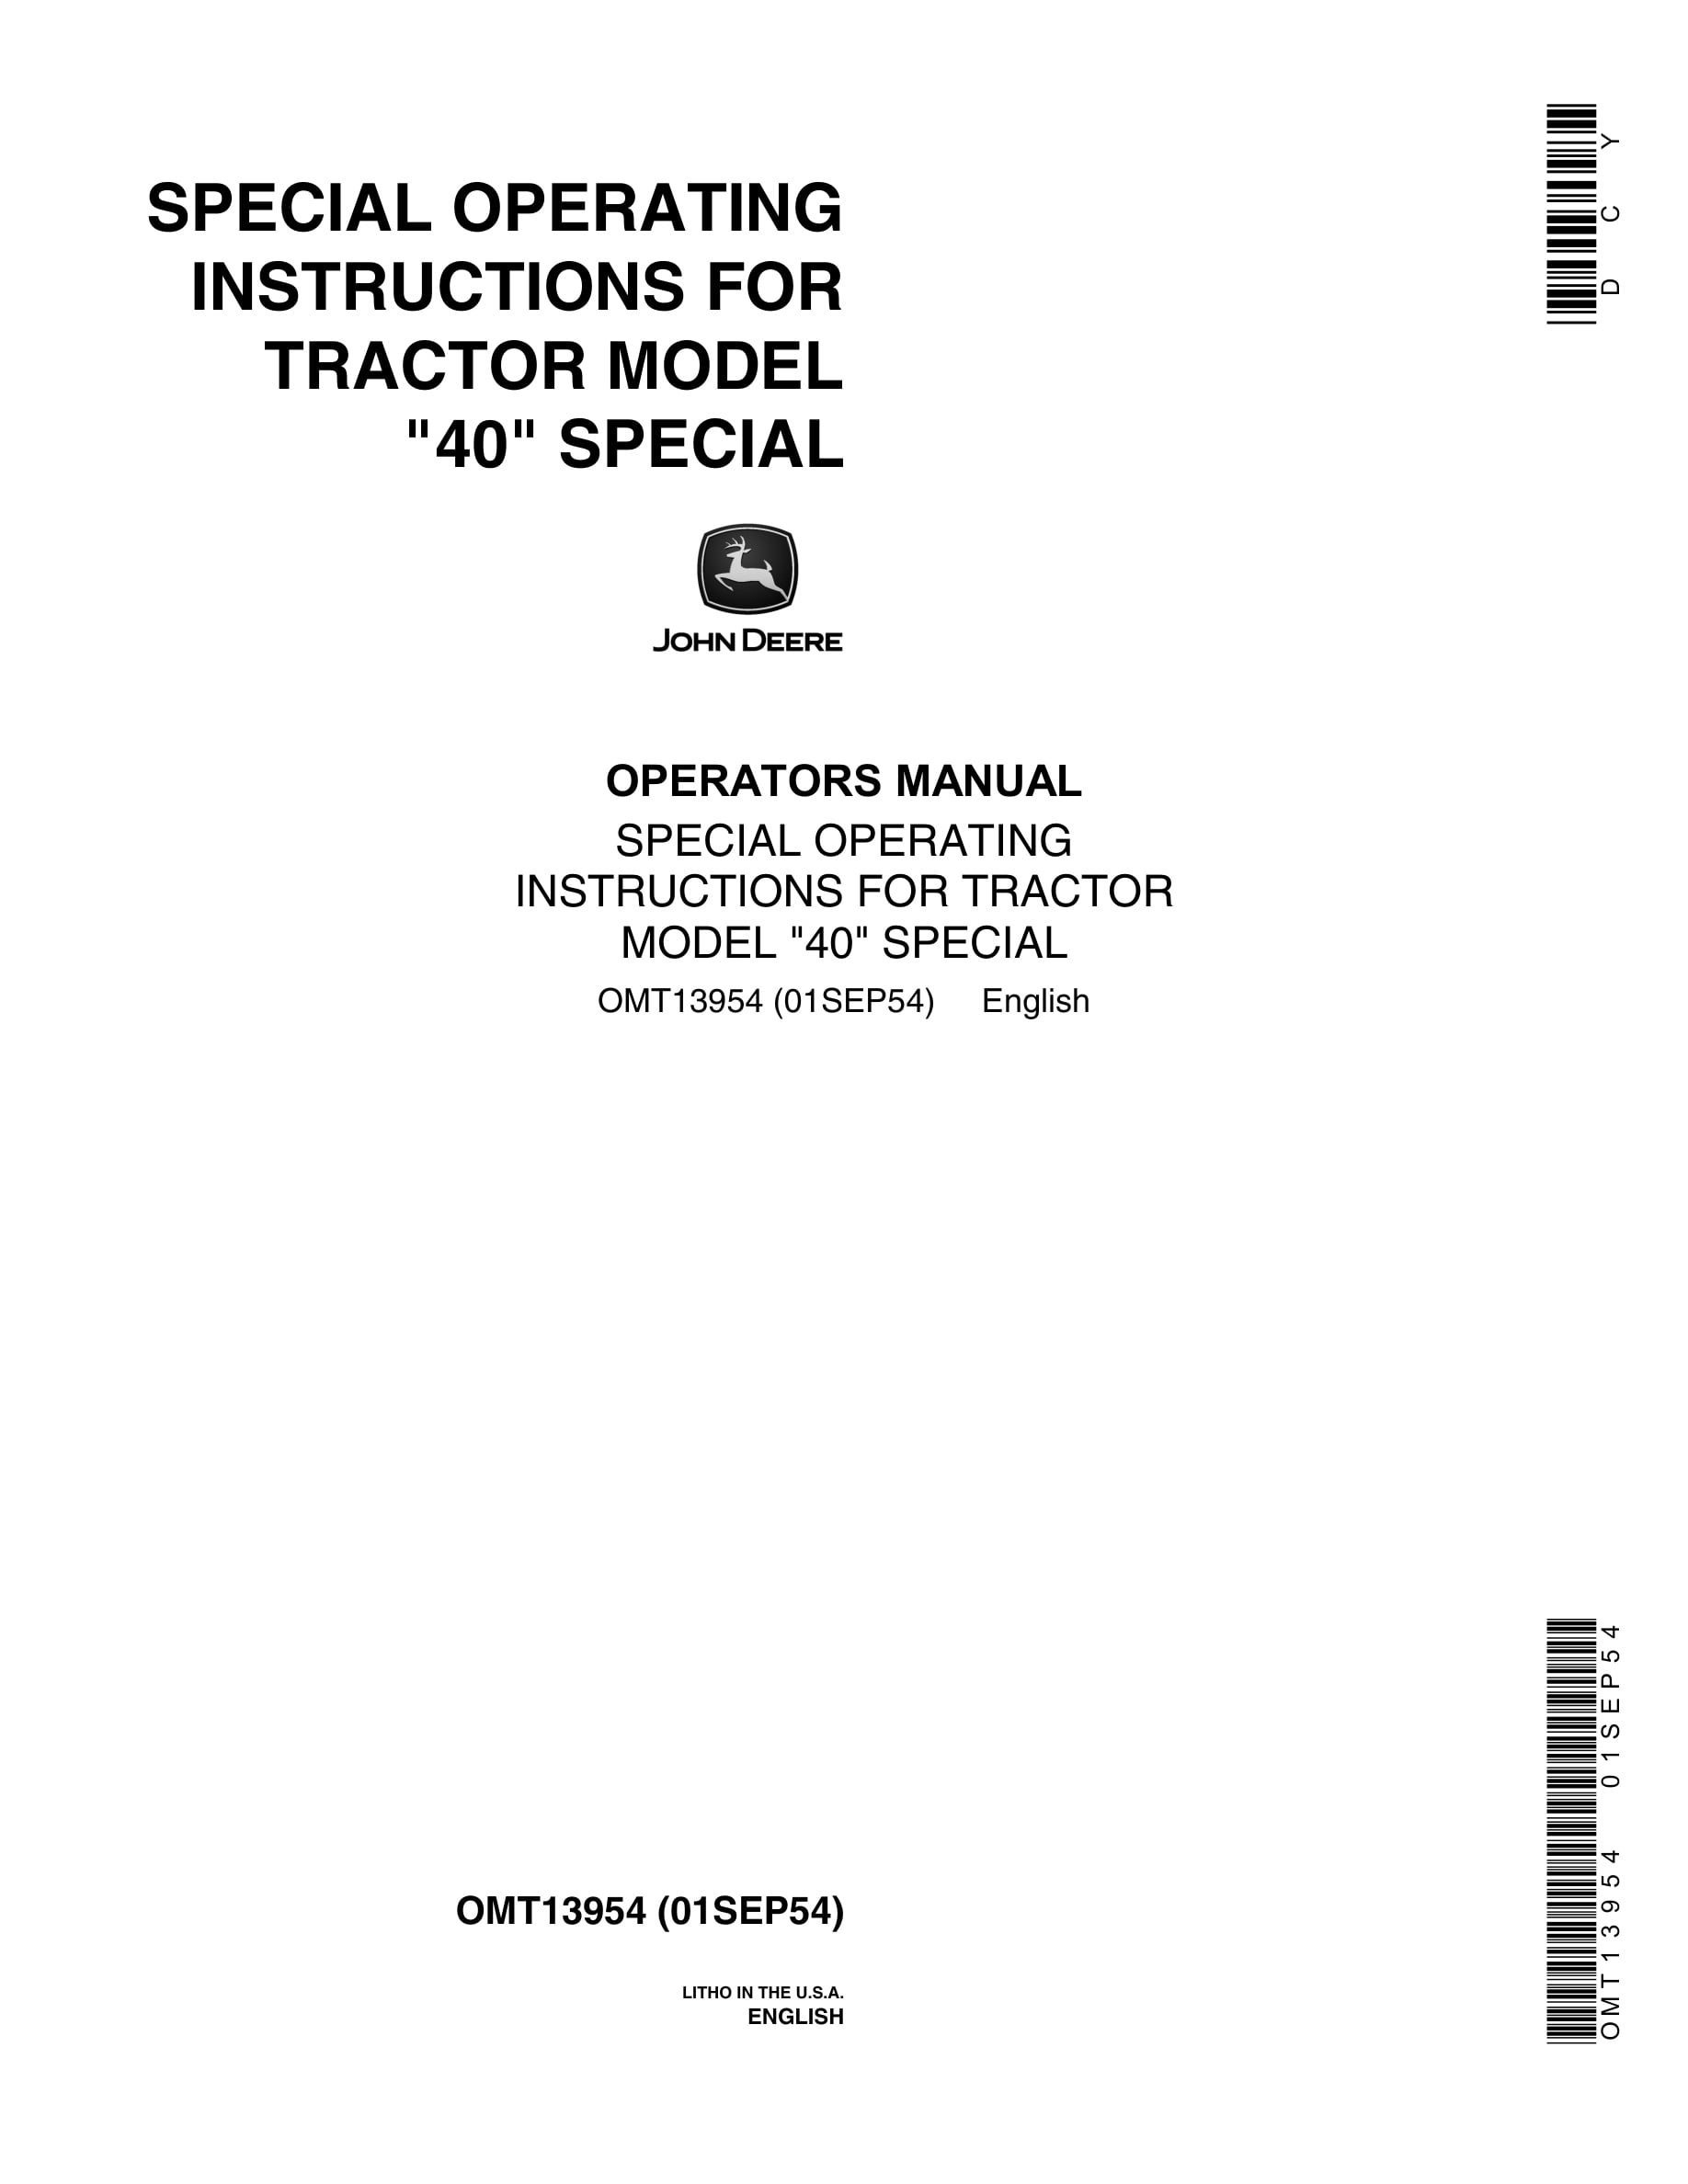 John Deere 40 Special Tractor Operator Manual OMT1395-1